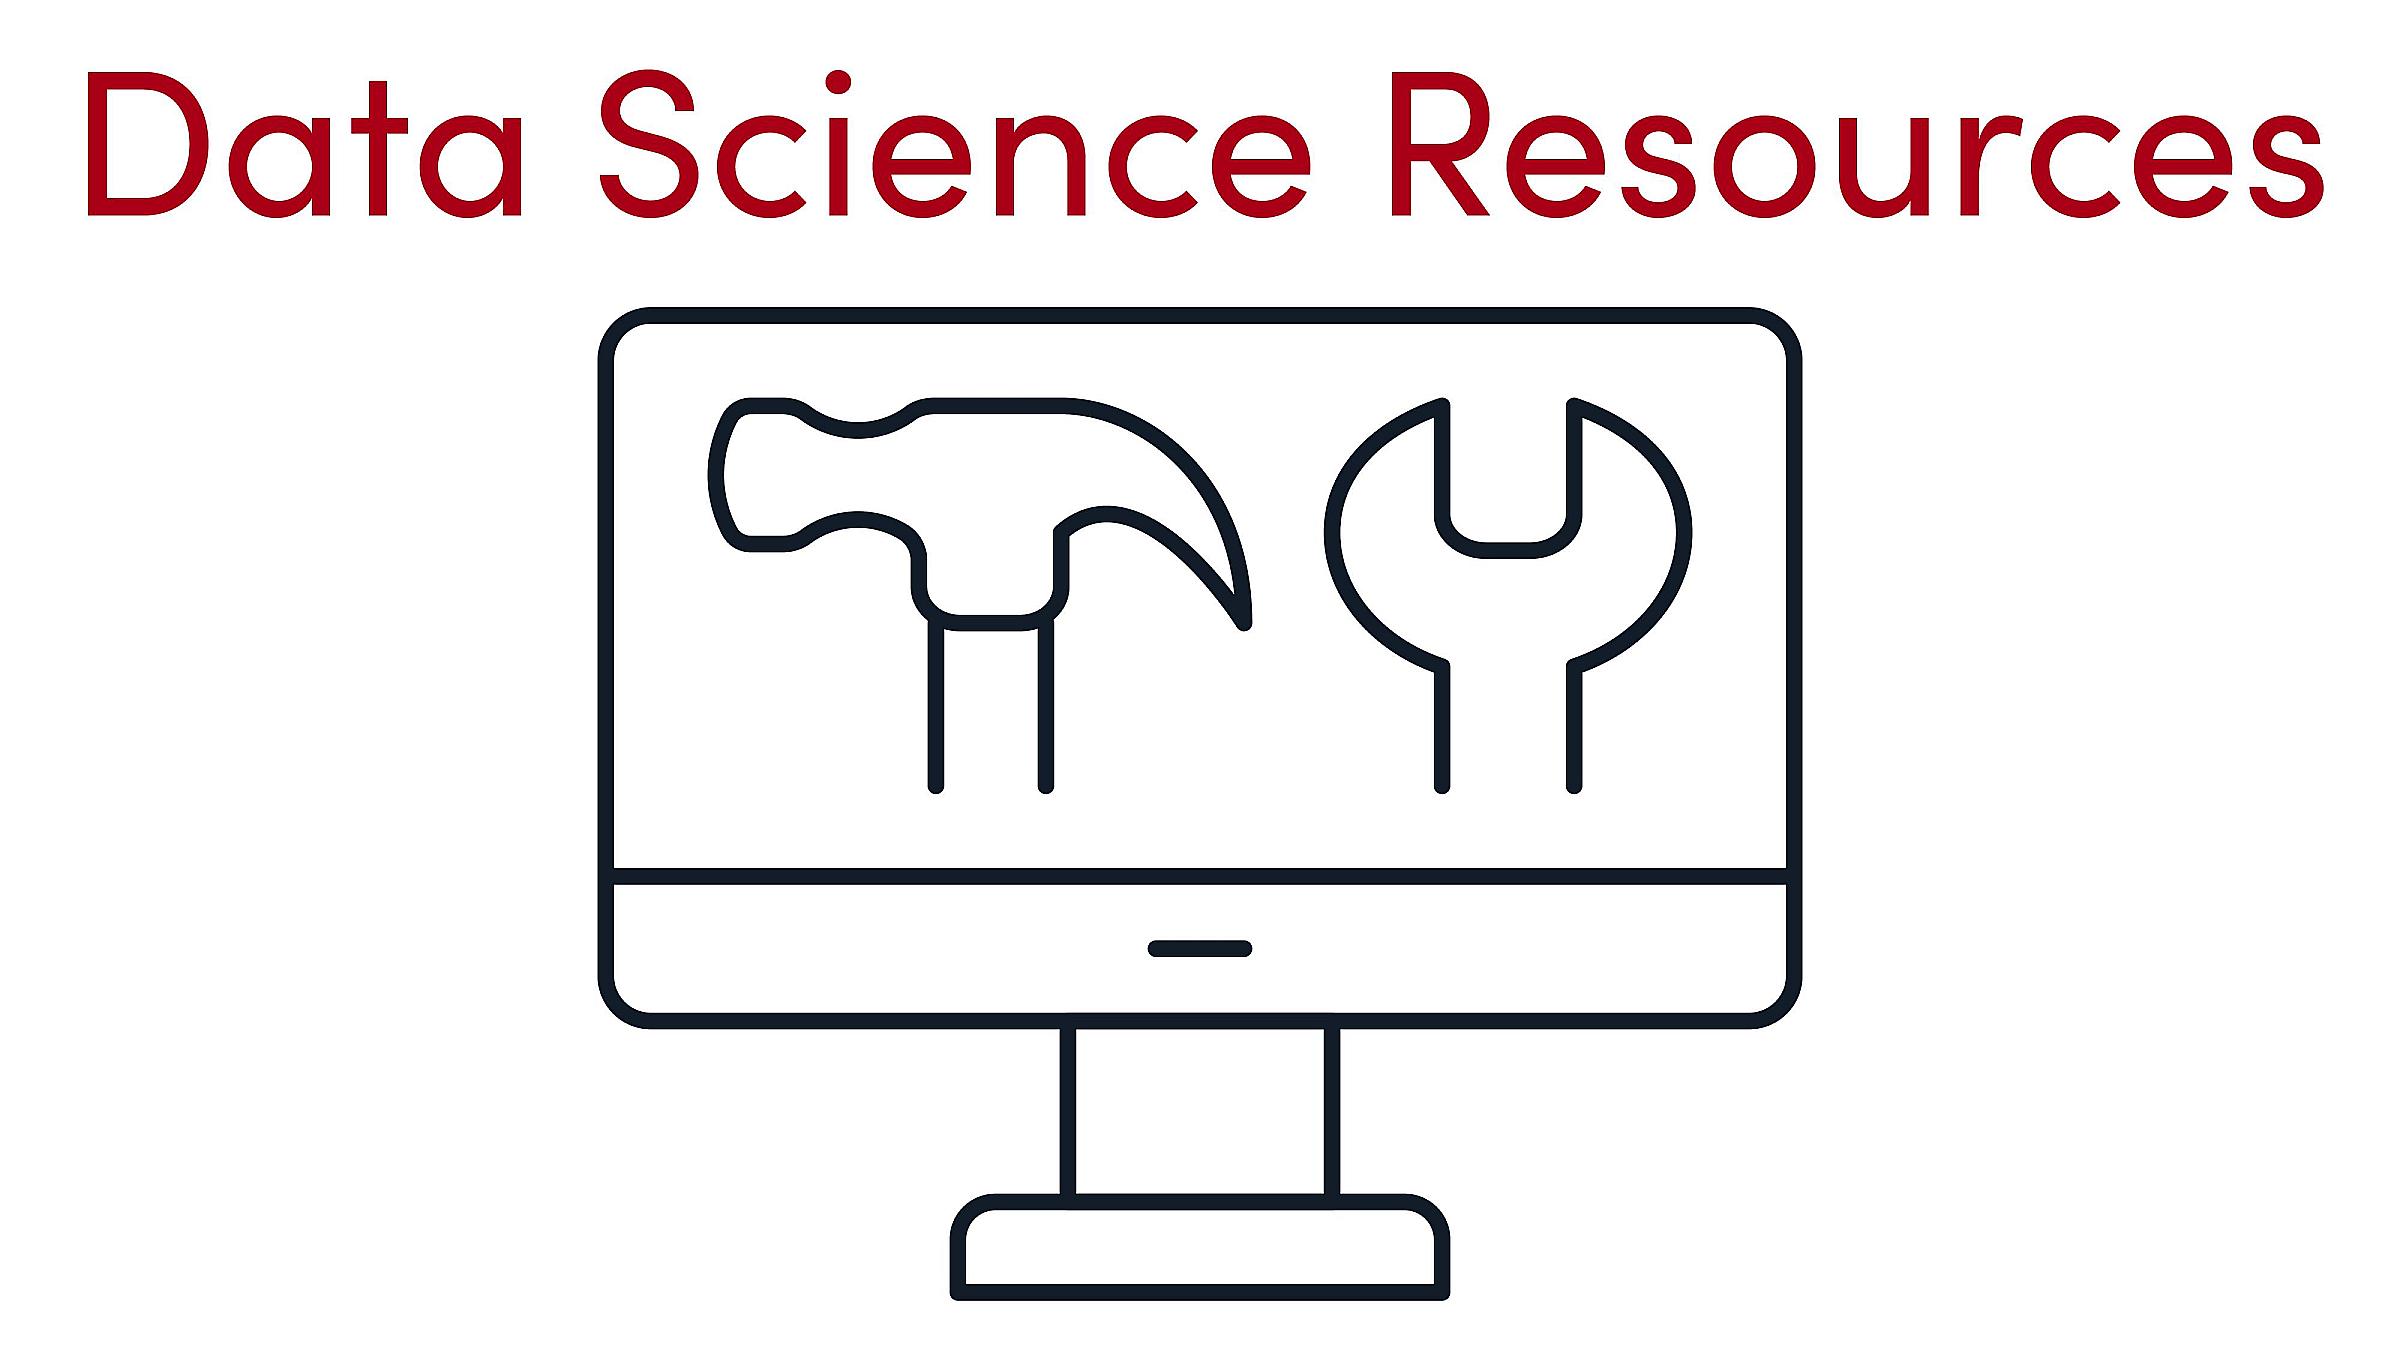 Data Sciences Resources